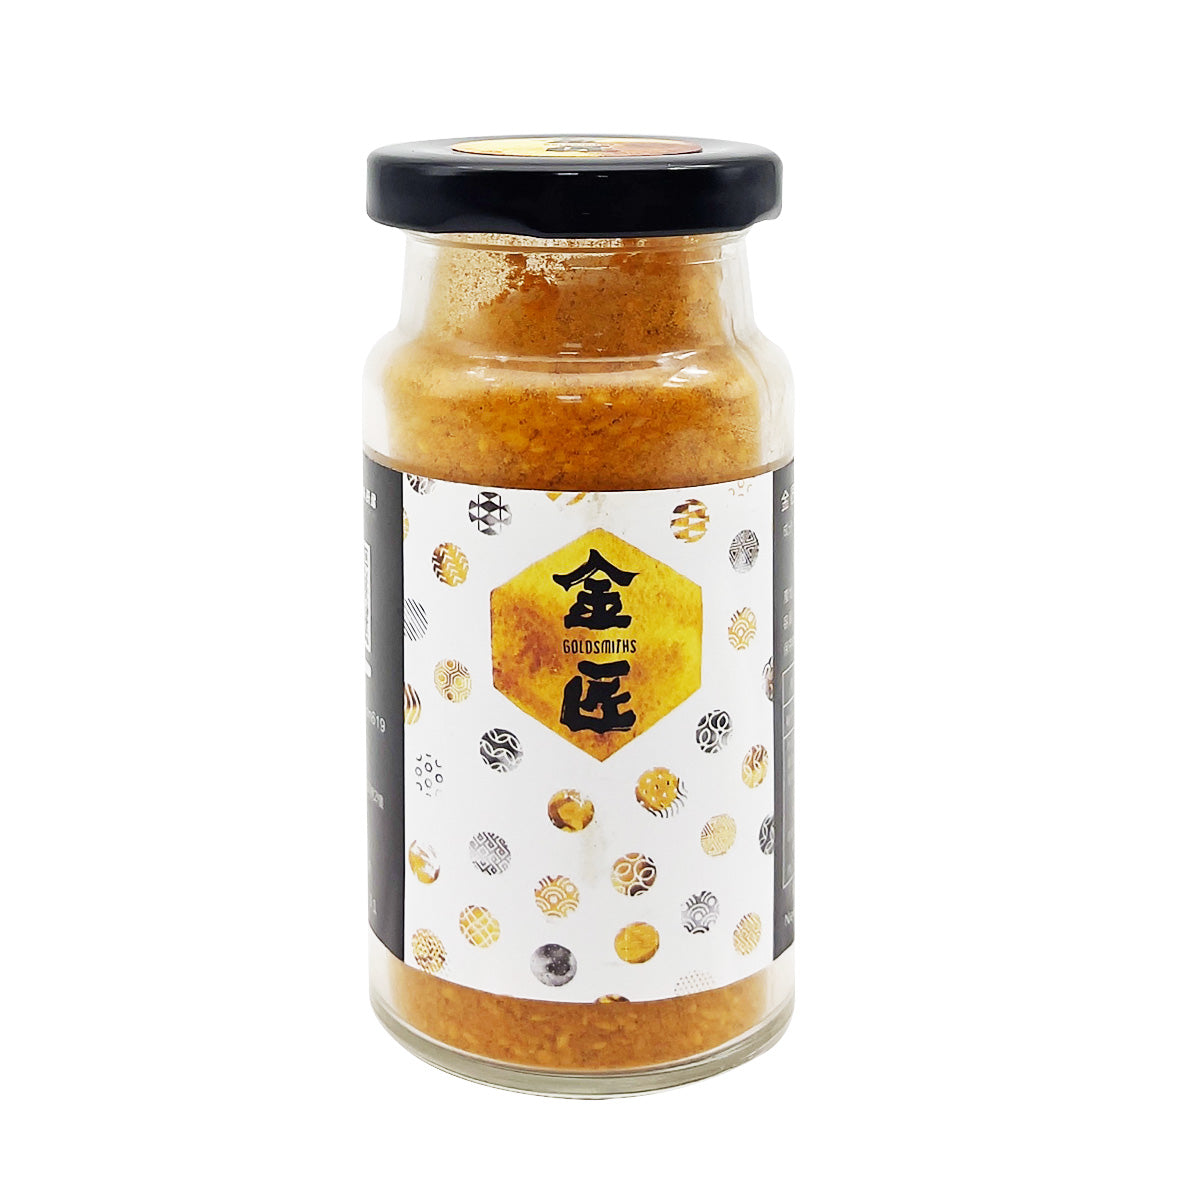 【GOLDSMITHS】Spicy Chili Powder (With Garlic) 90g